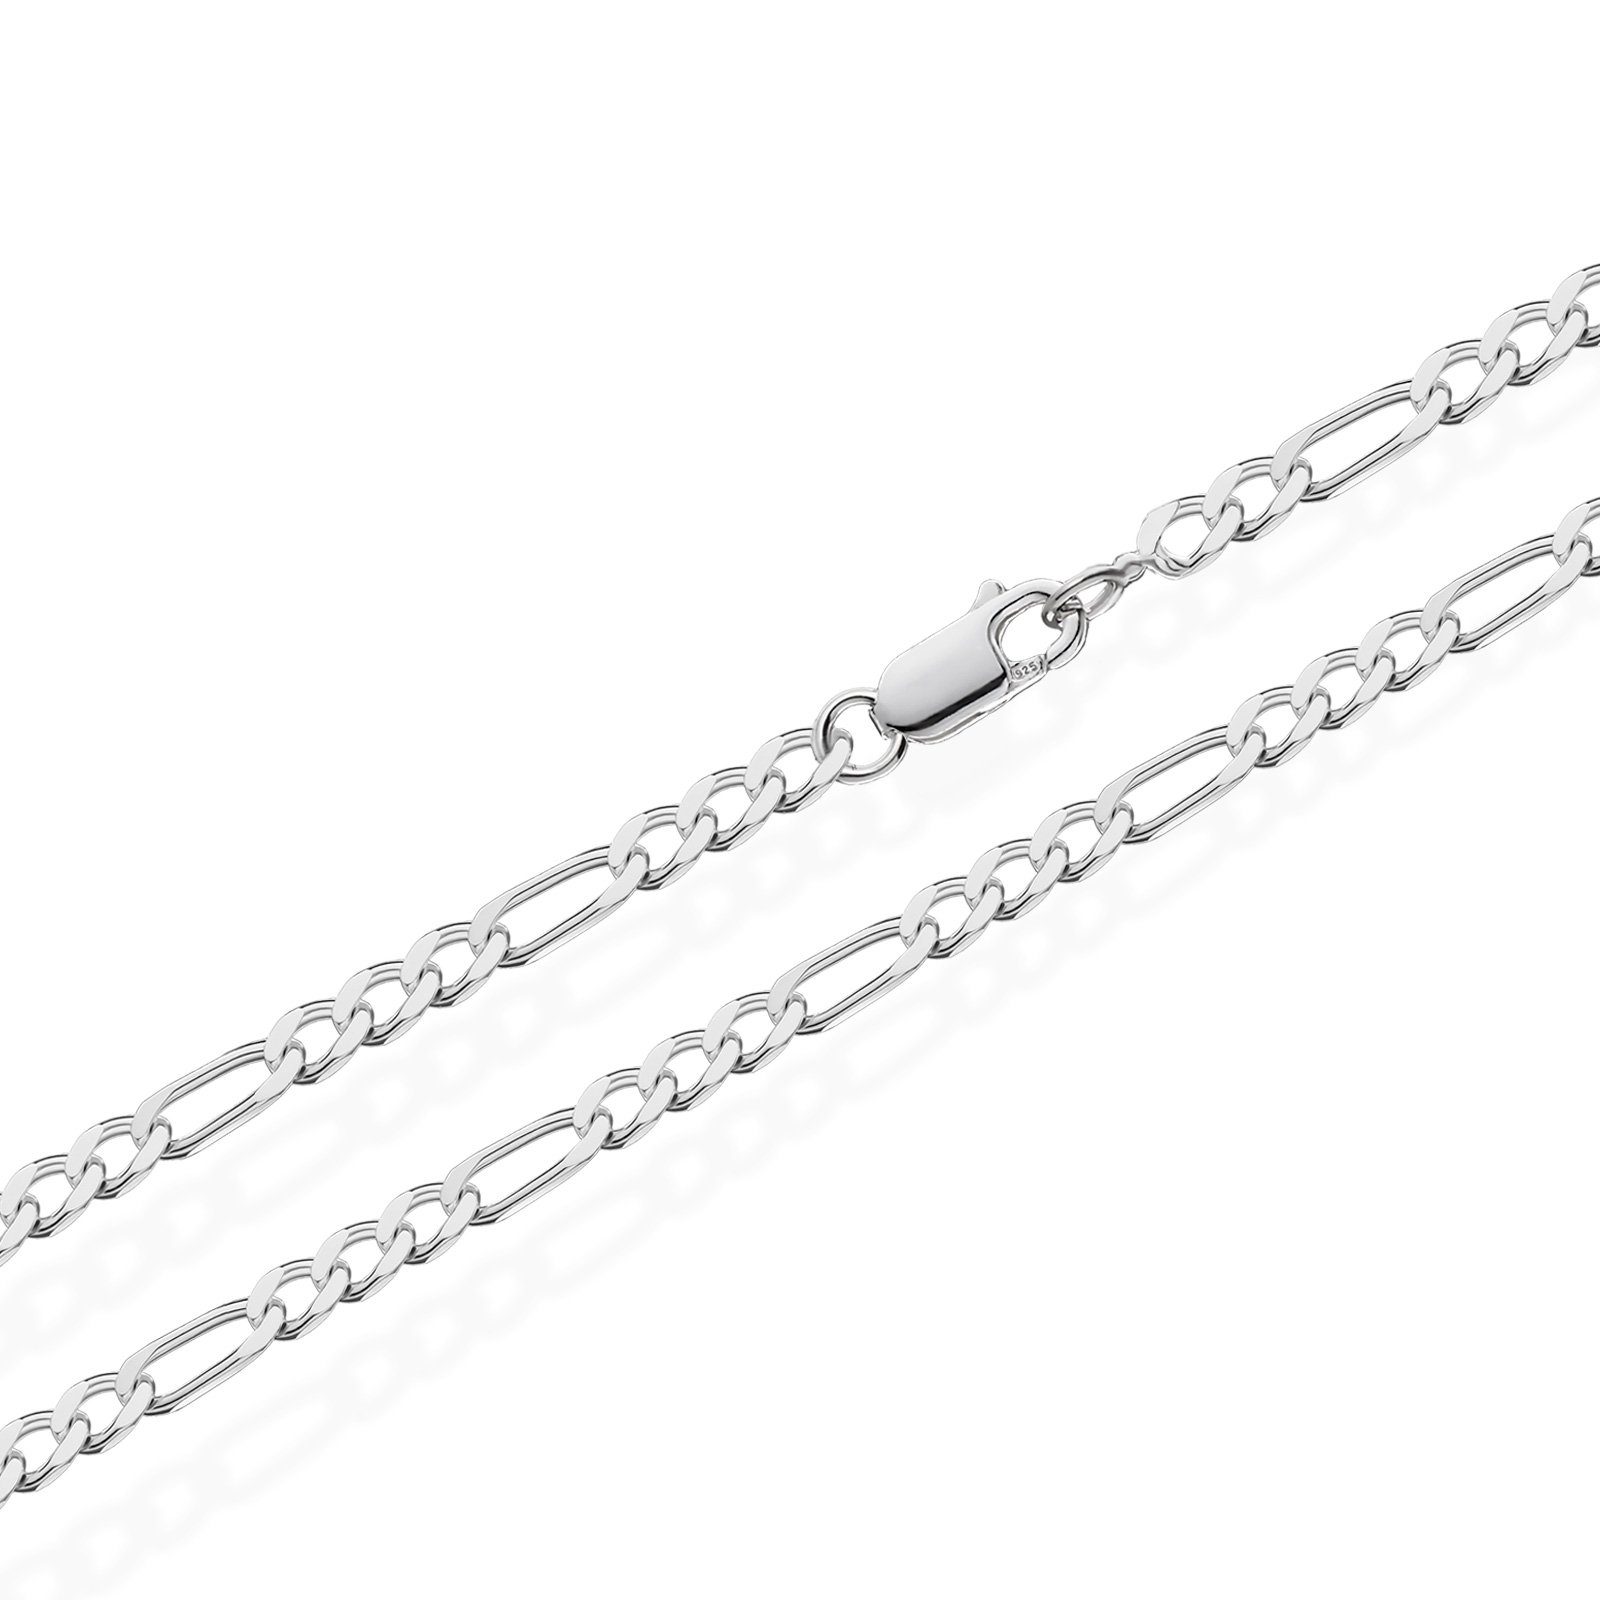 NKlaus Silberarmband Armband Silber Echt 925 5,8g 21cm Figaro Armkette 3,6mm Kette Sterling